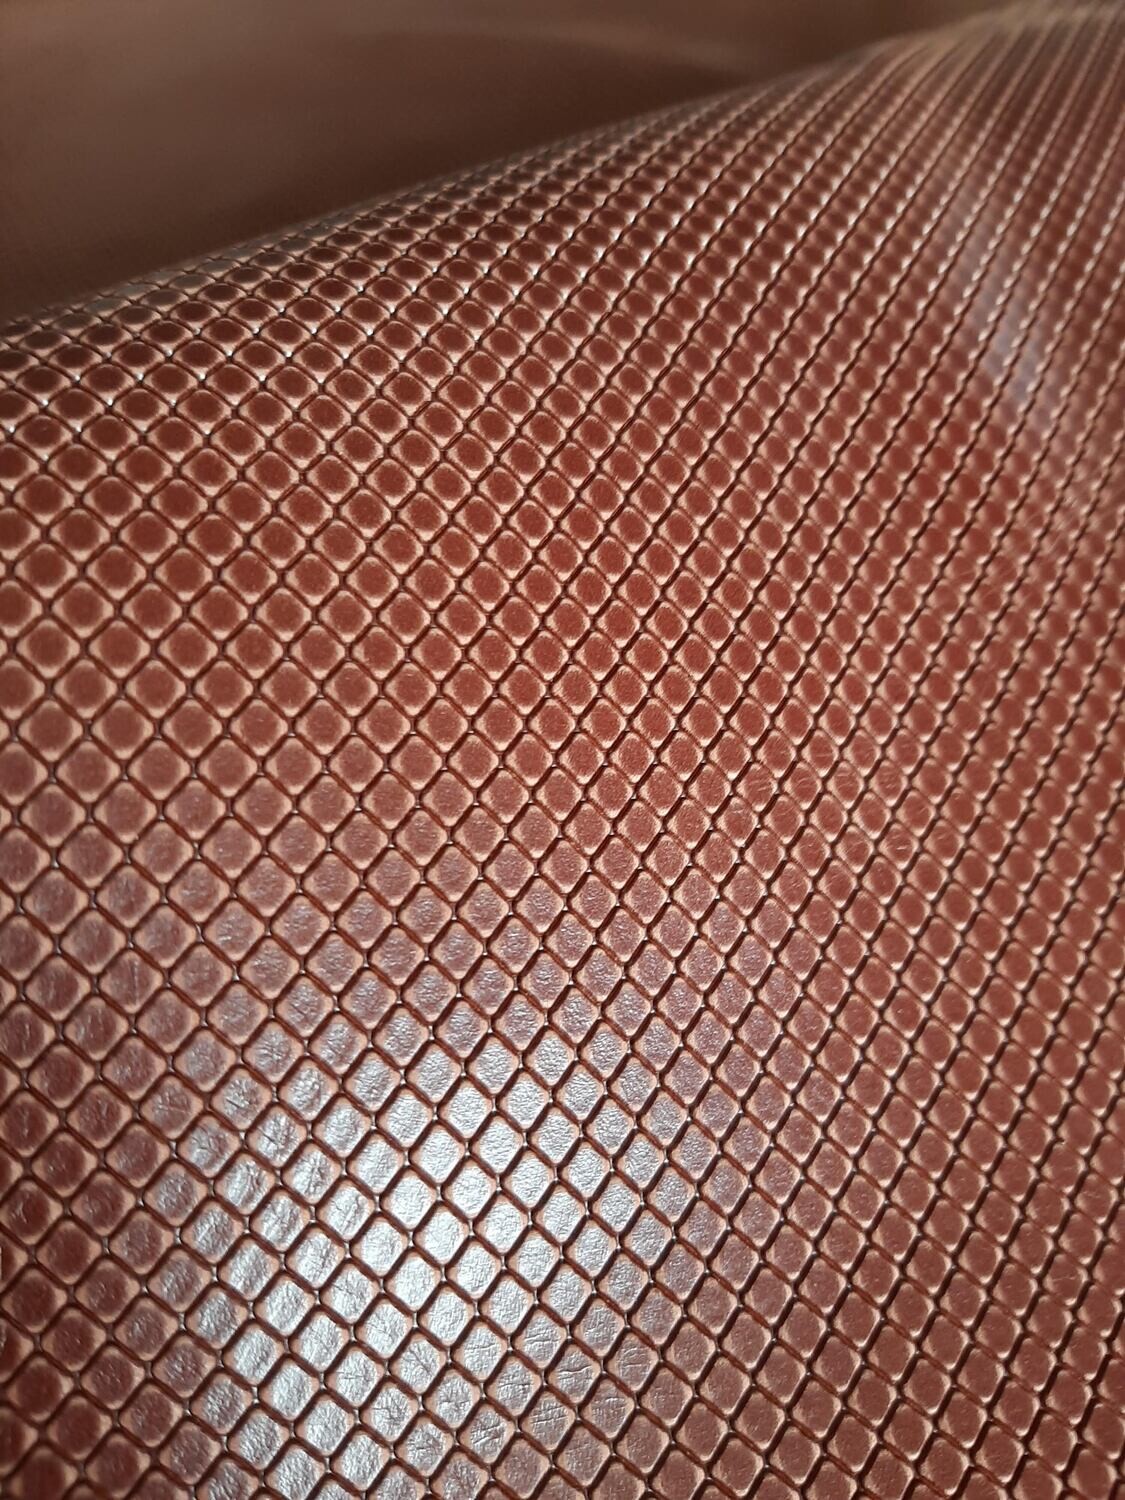 Leather bovine grid brown